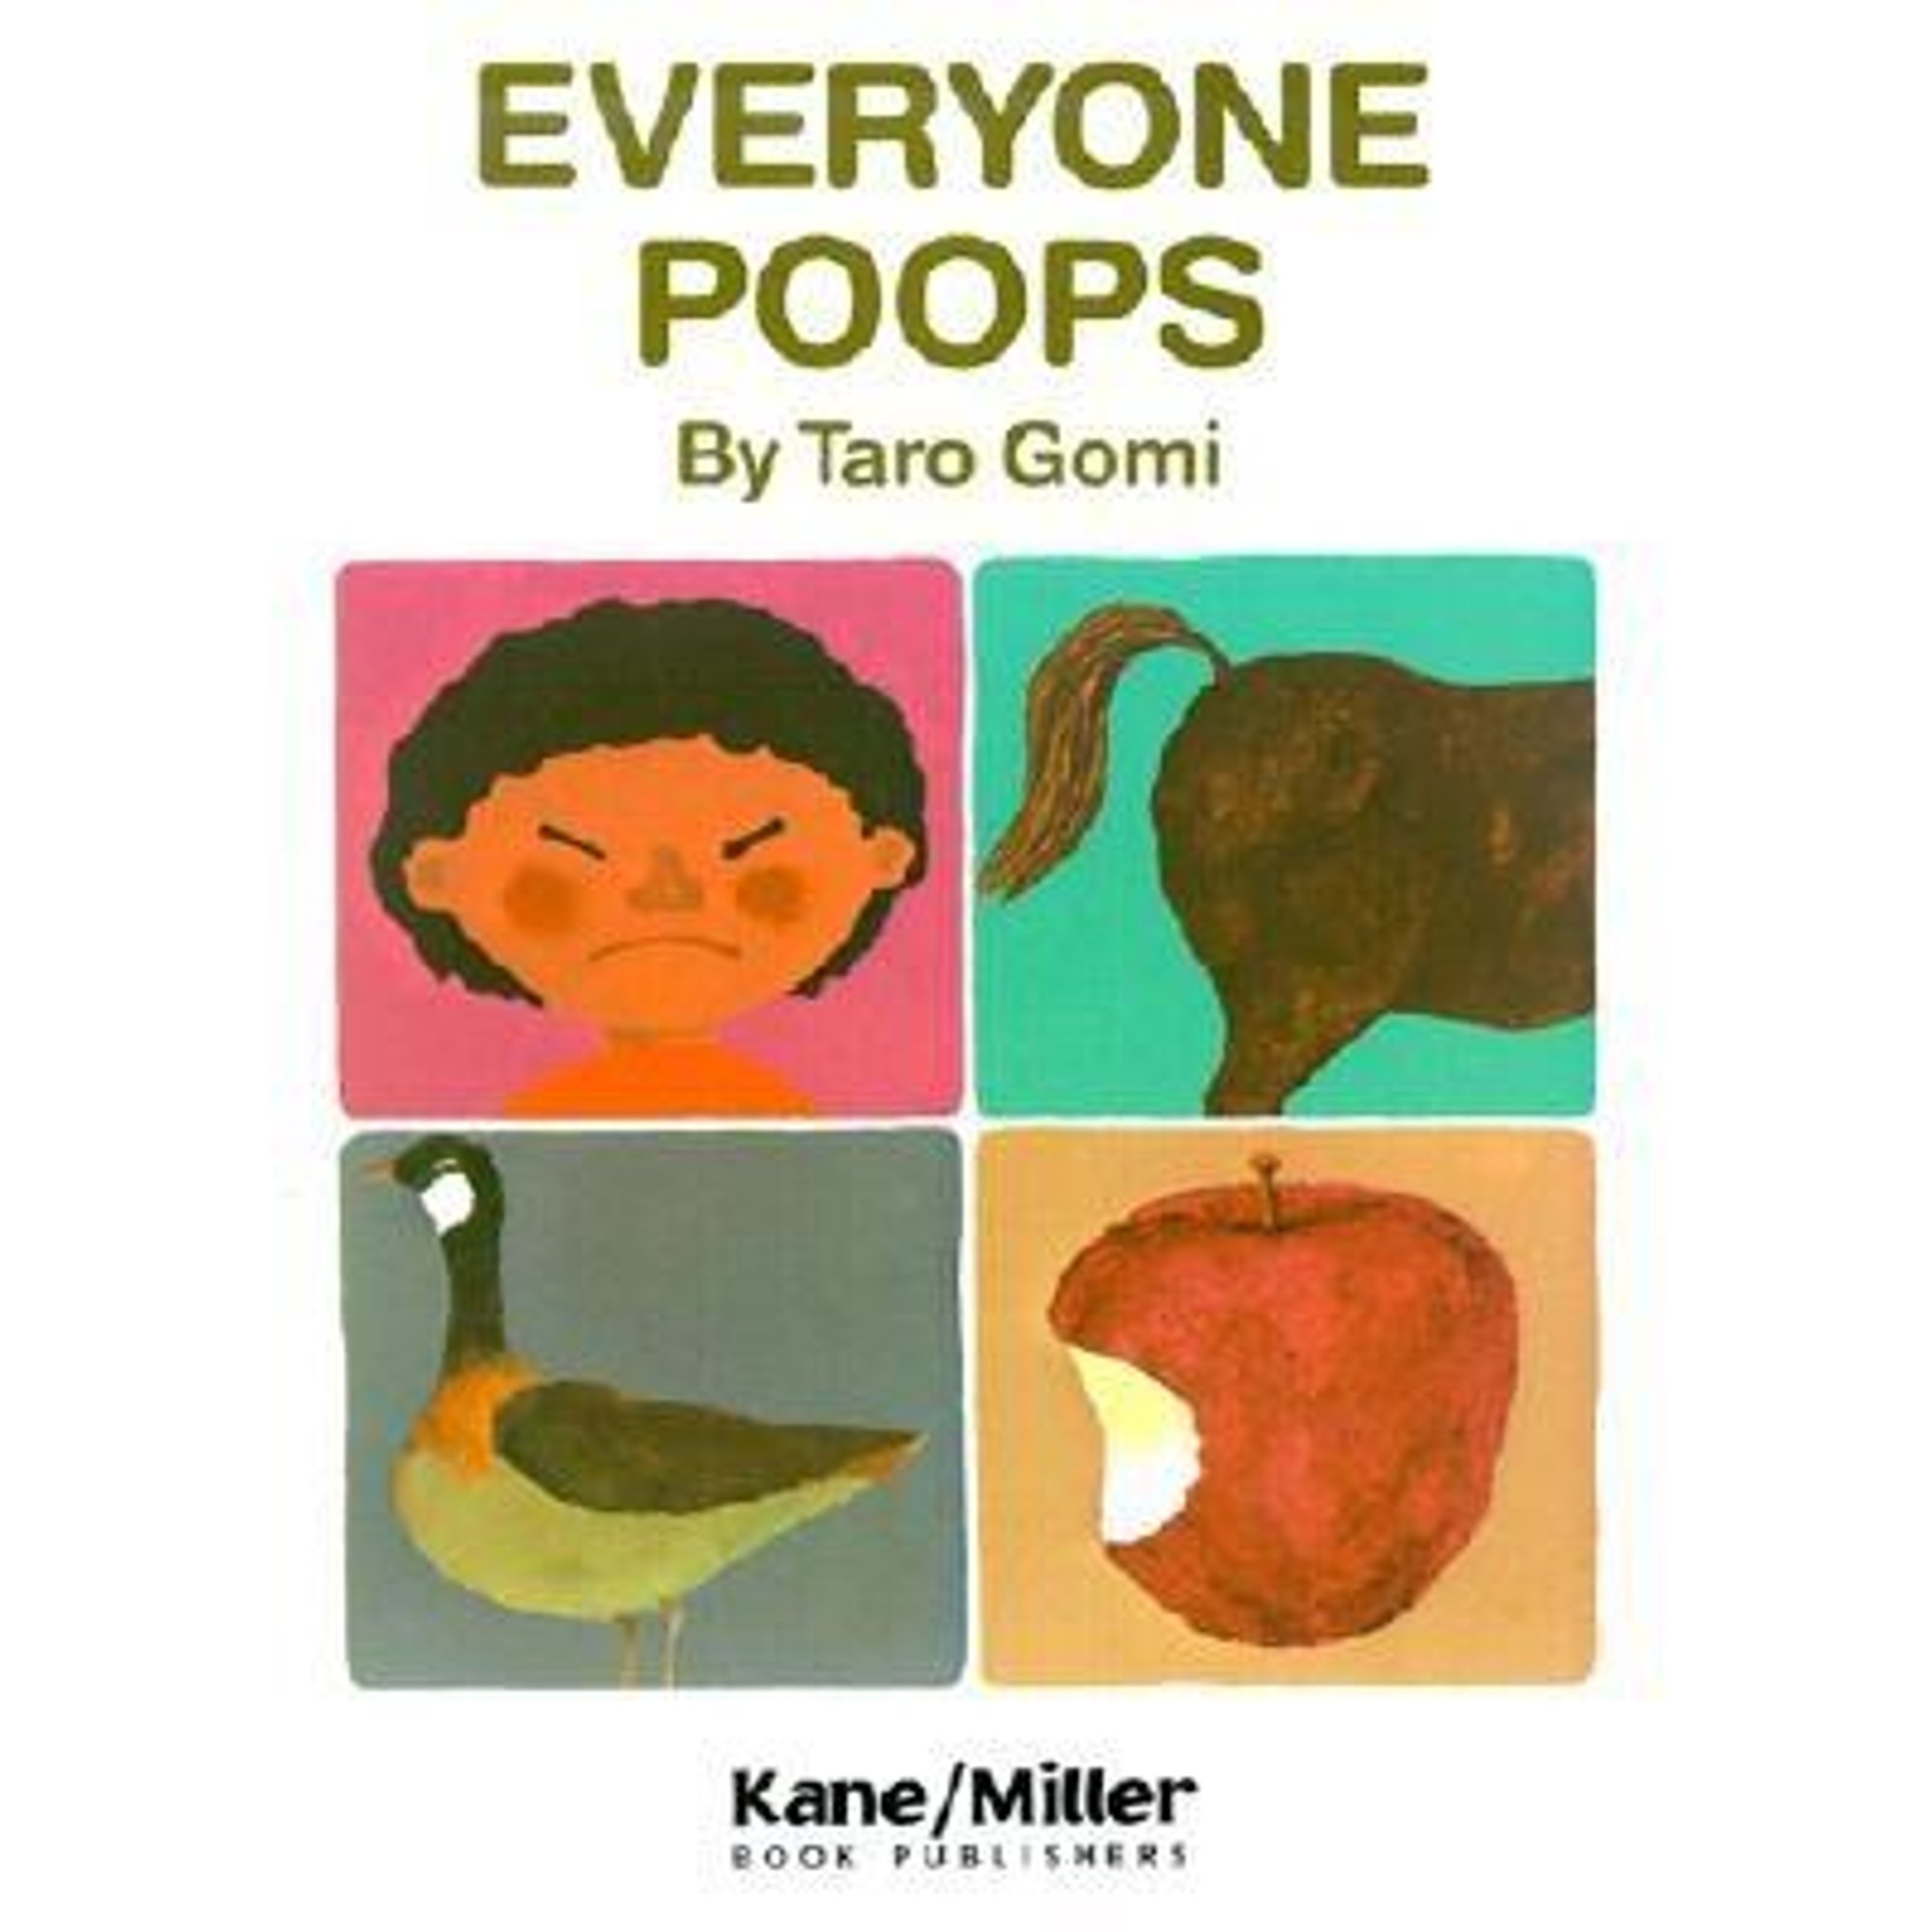 "Everyone Poops" by Taro Gomi